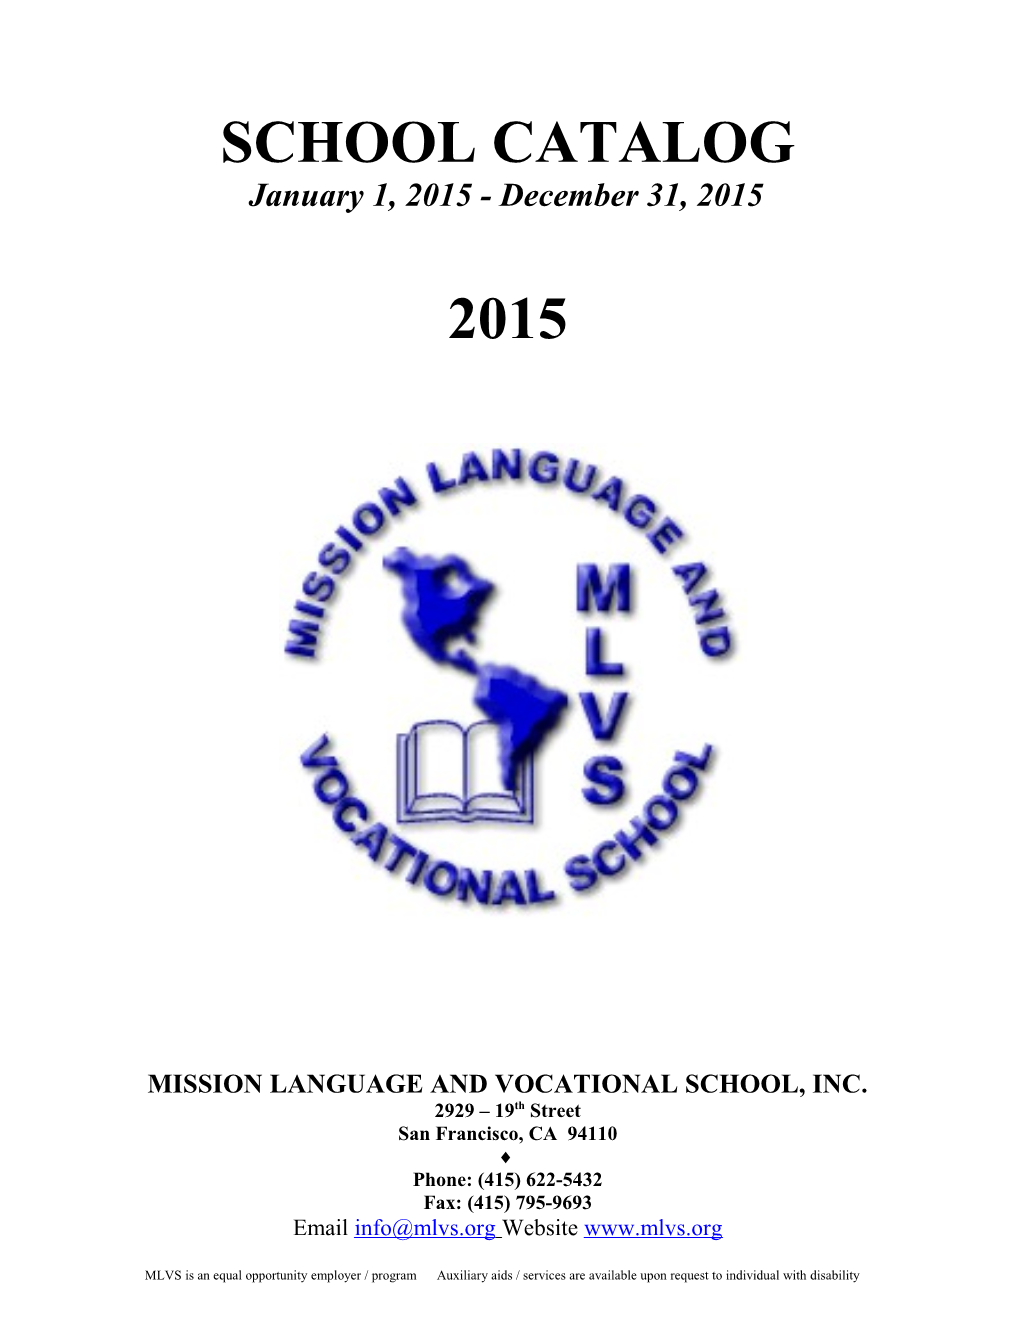 Mission Language and Vocational School, Inc